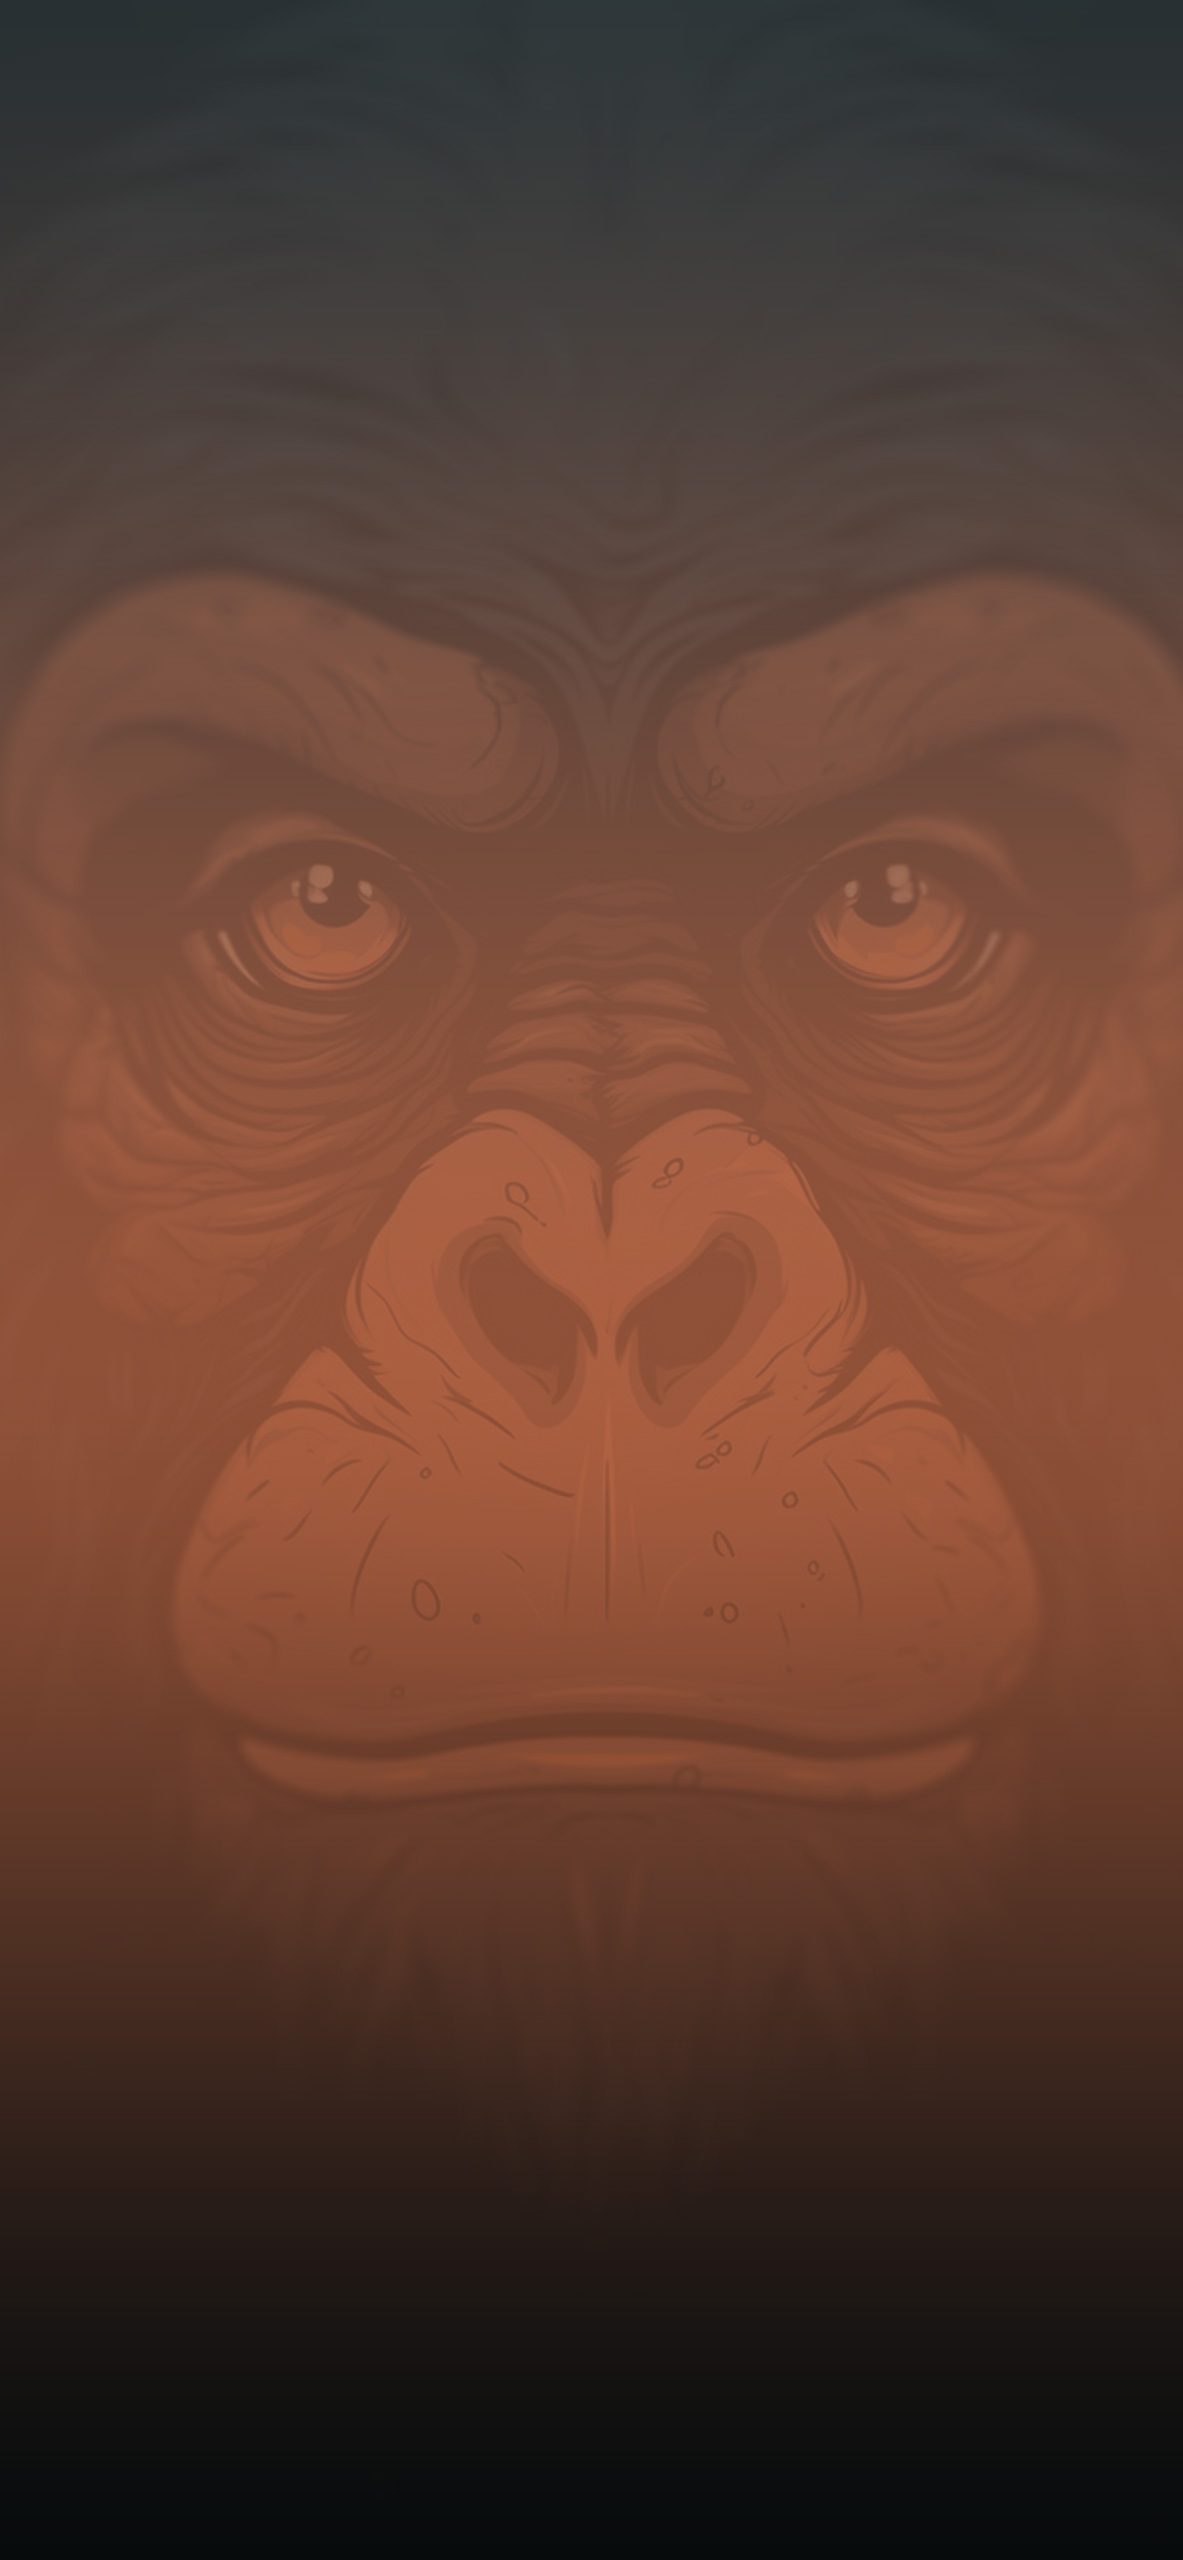 ape face black background